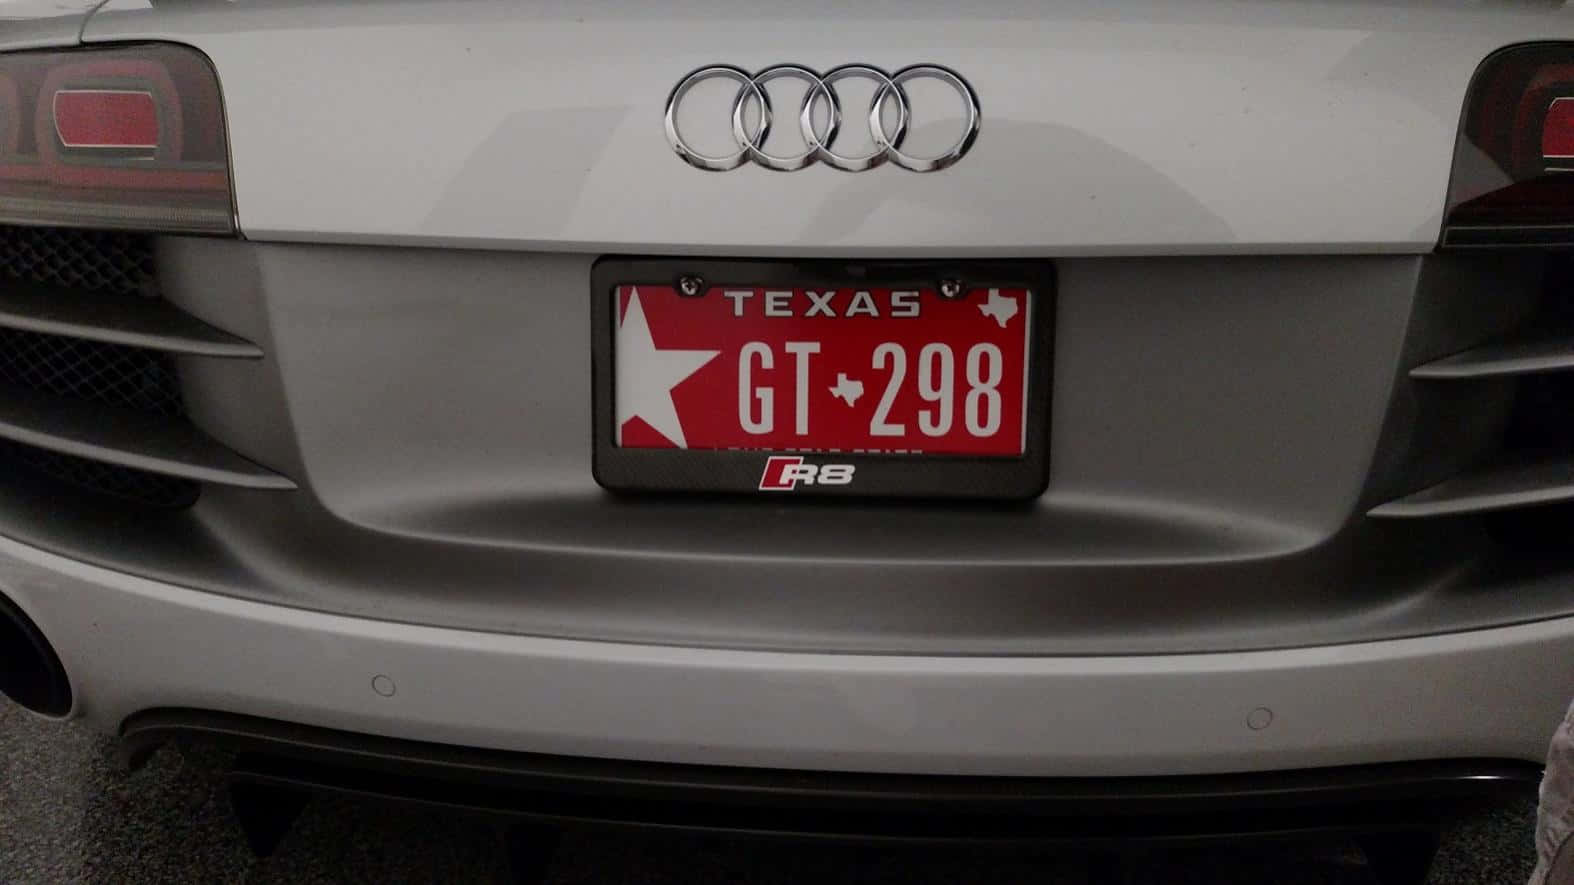 Targarossa Della Texas Audi